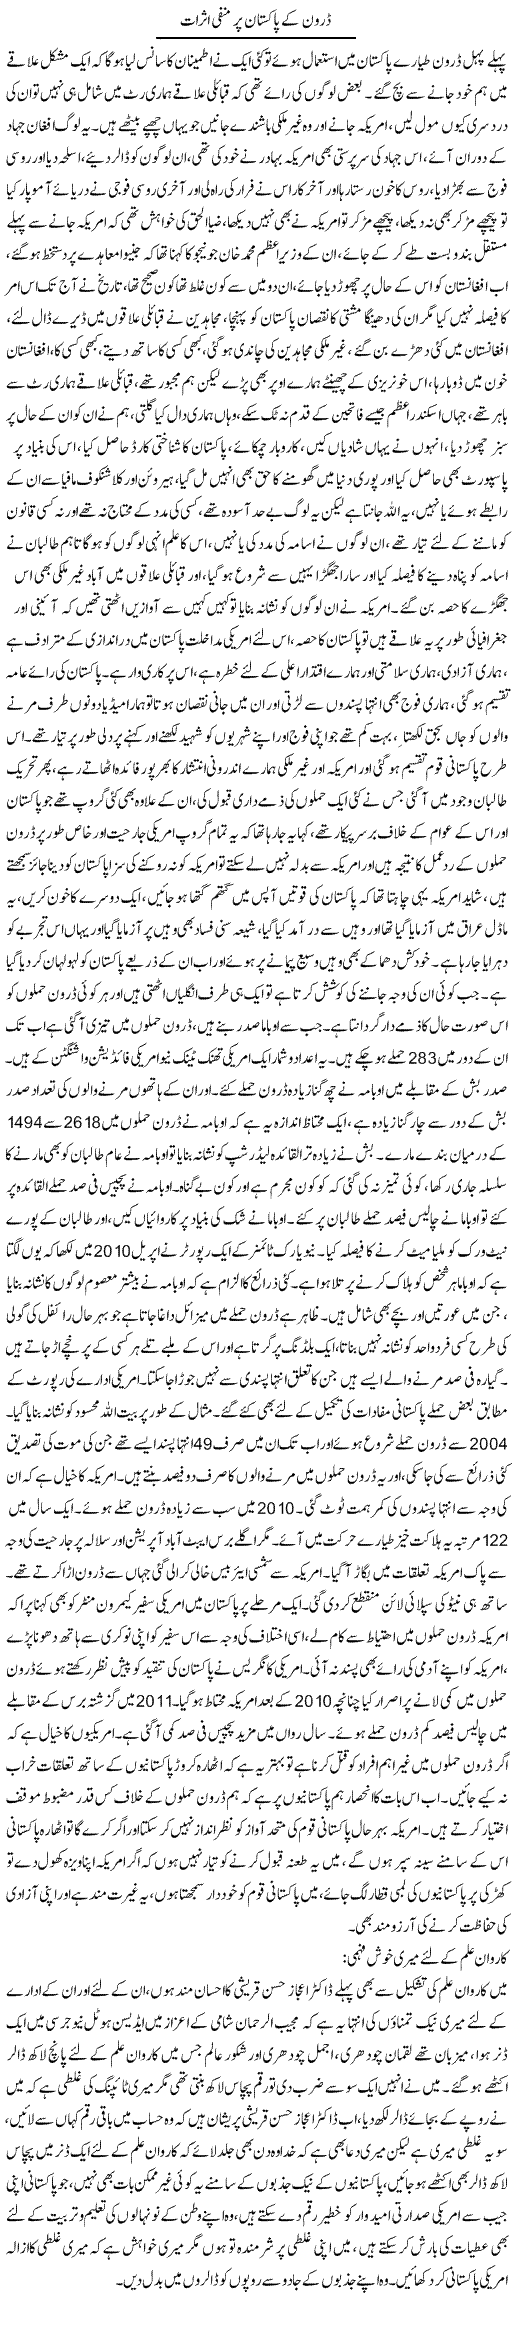 Drones Effect on Pakistan - Urdu Column